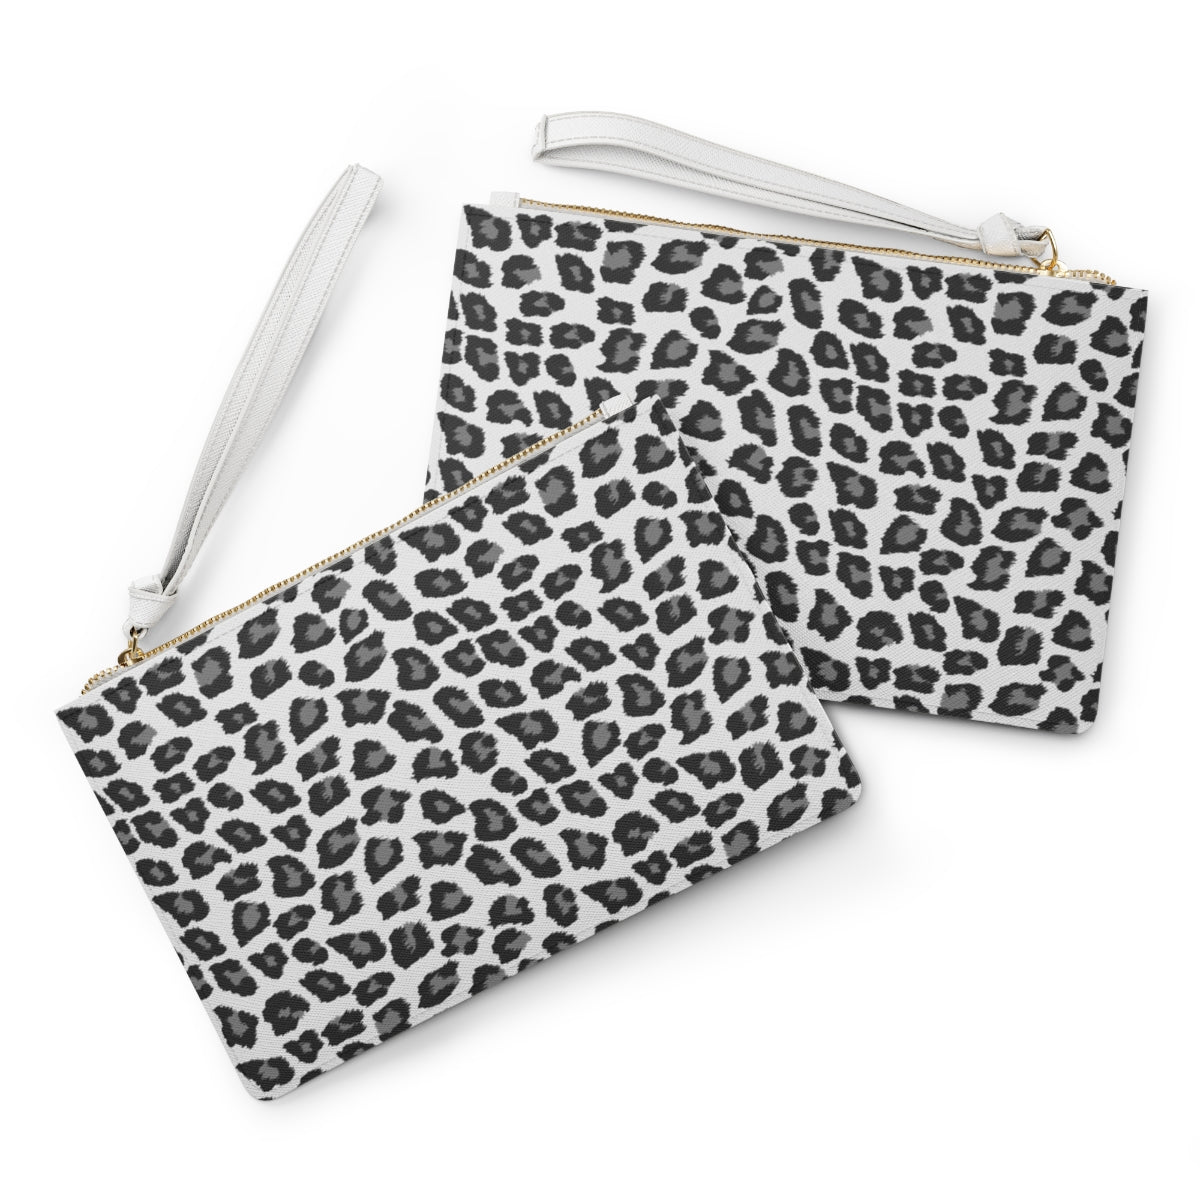 Snow Leopard Clutch Wristlet Purse, Black White Animal Print Vegan Leather Pockets Zipper Evening Modern Bag Strap Wallet Women Starcove Fashion